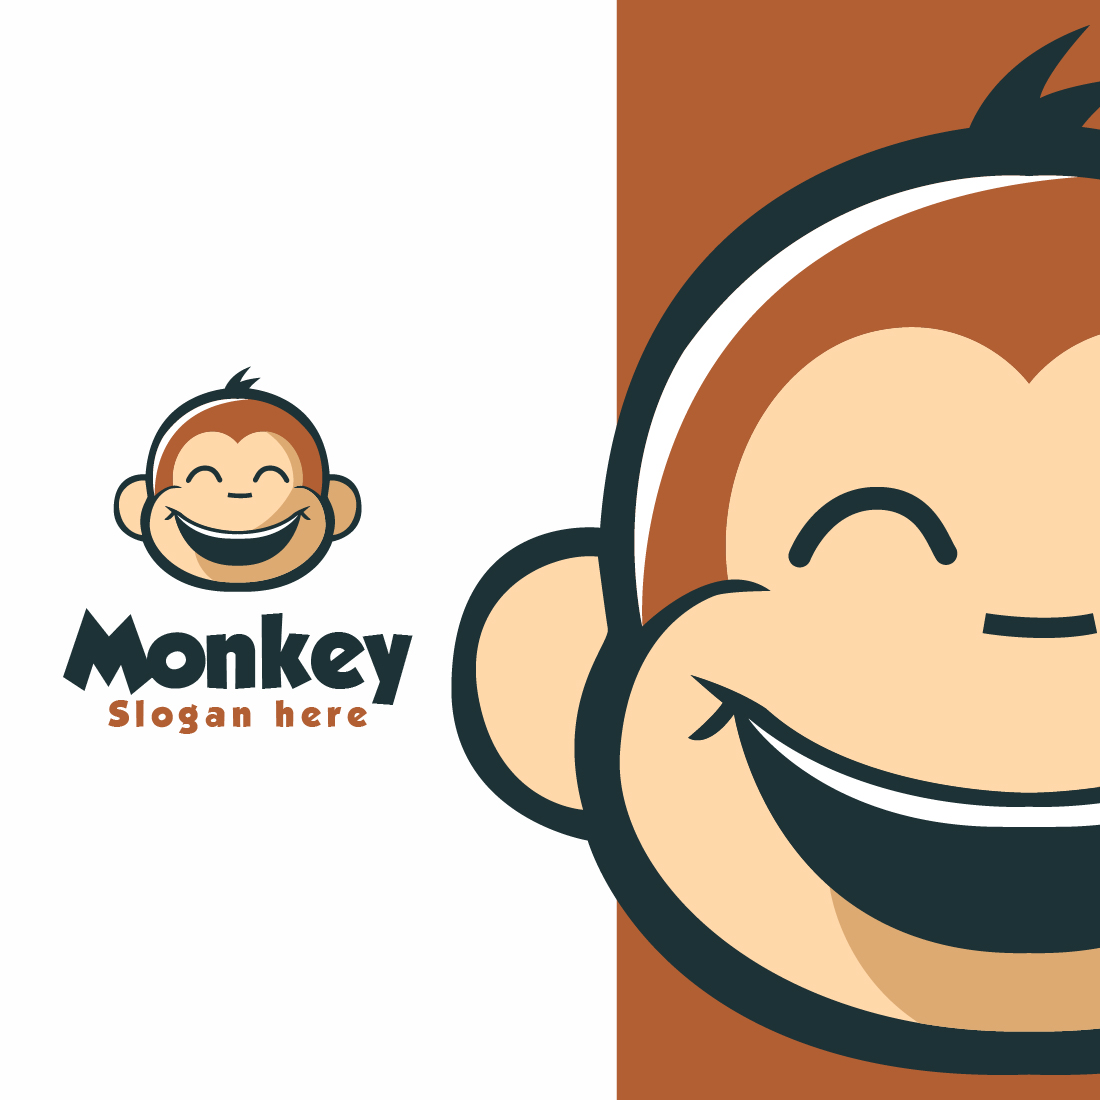 Cute Monkey Smile Face Mascot logo Template cover image.